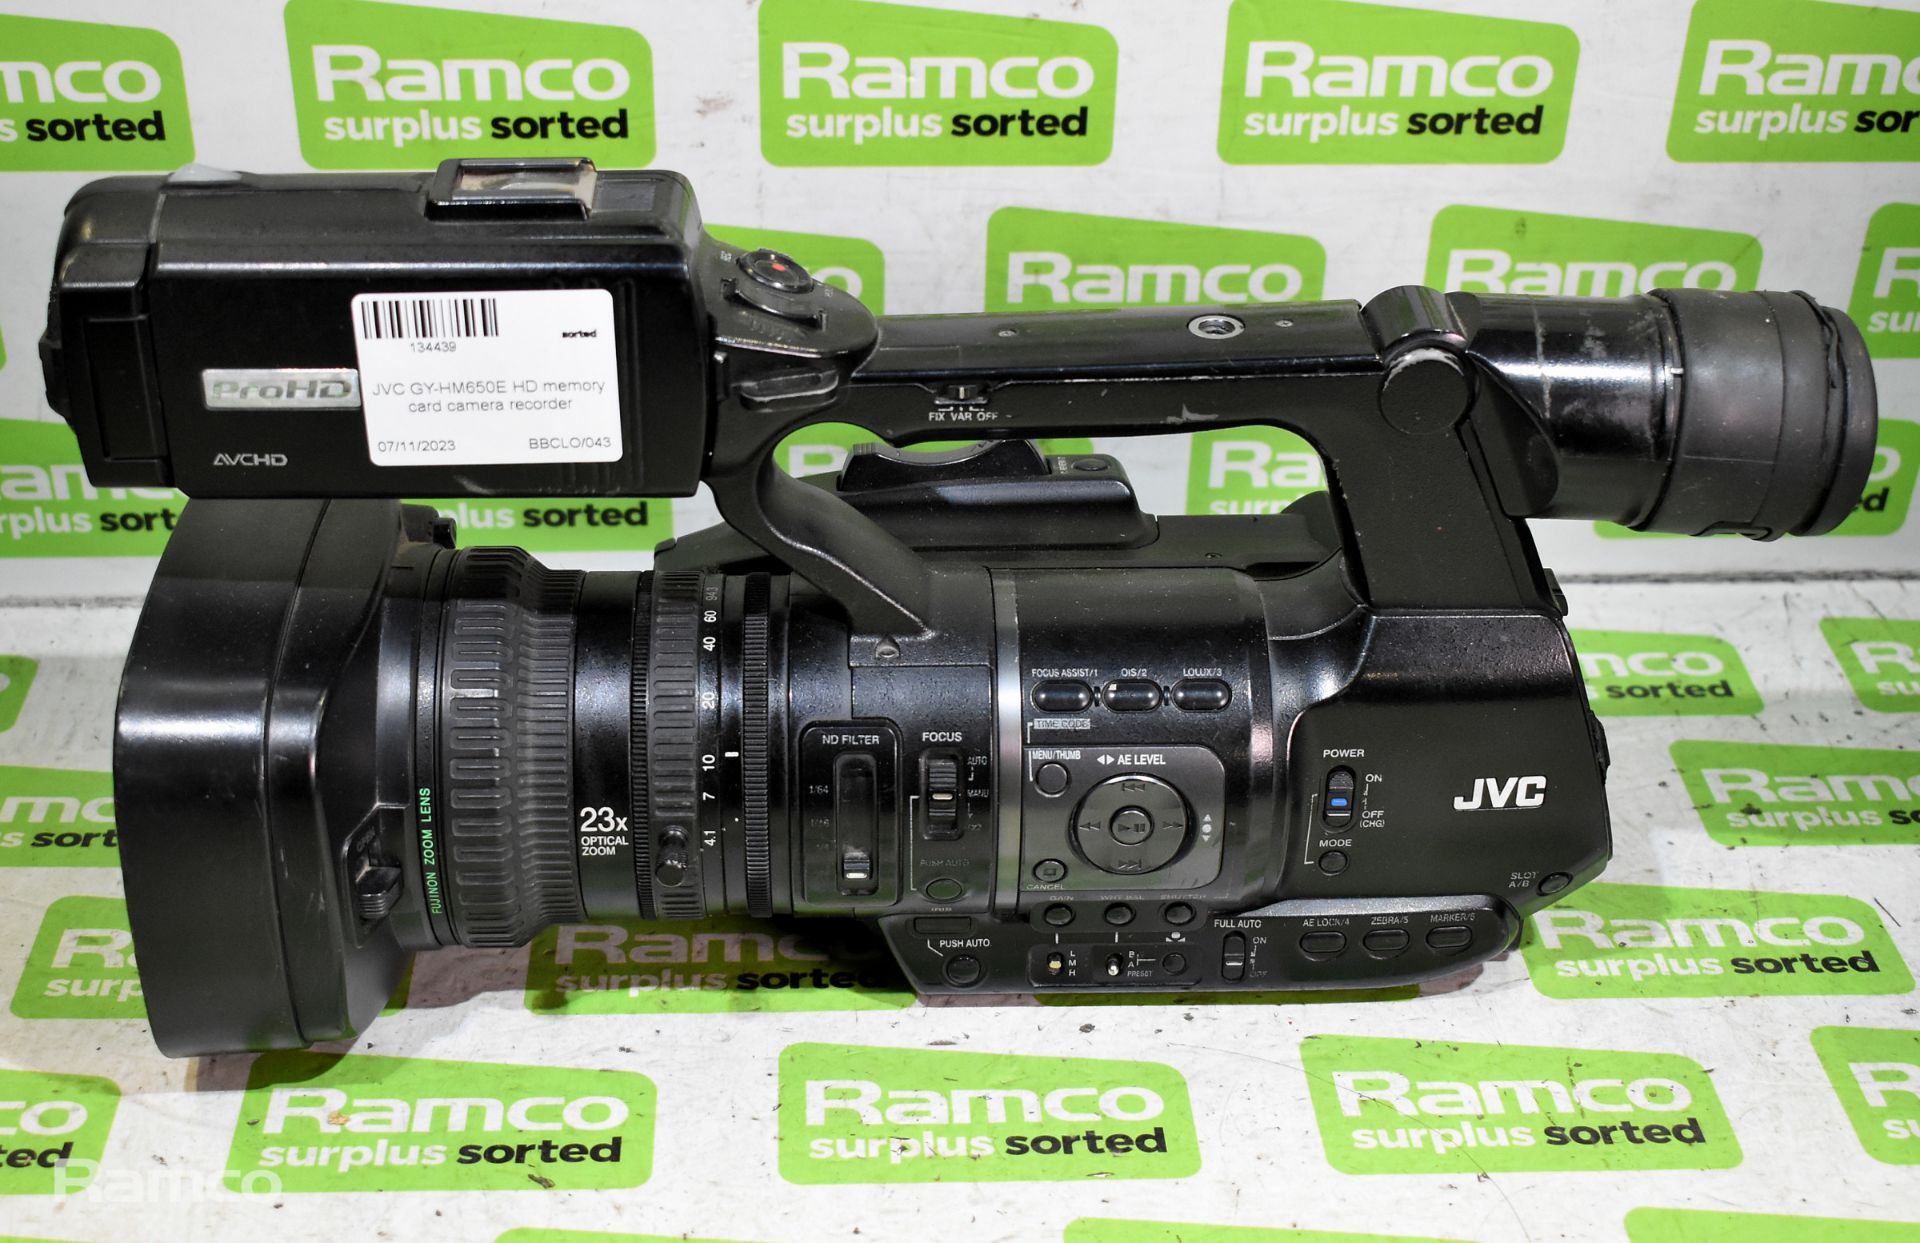 JVC GY-HM650E HD memory card camera recorder, Sony PMW-500 HD-XDCAM camcorder body - SPARES/REPAIRS - Bild 2 aus 21